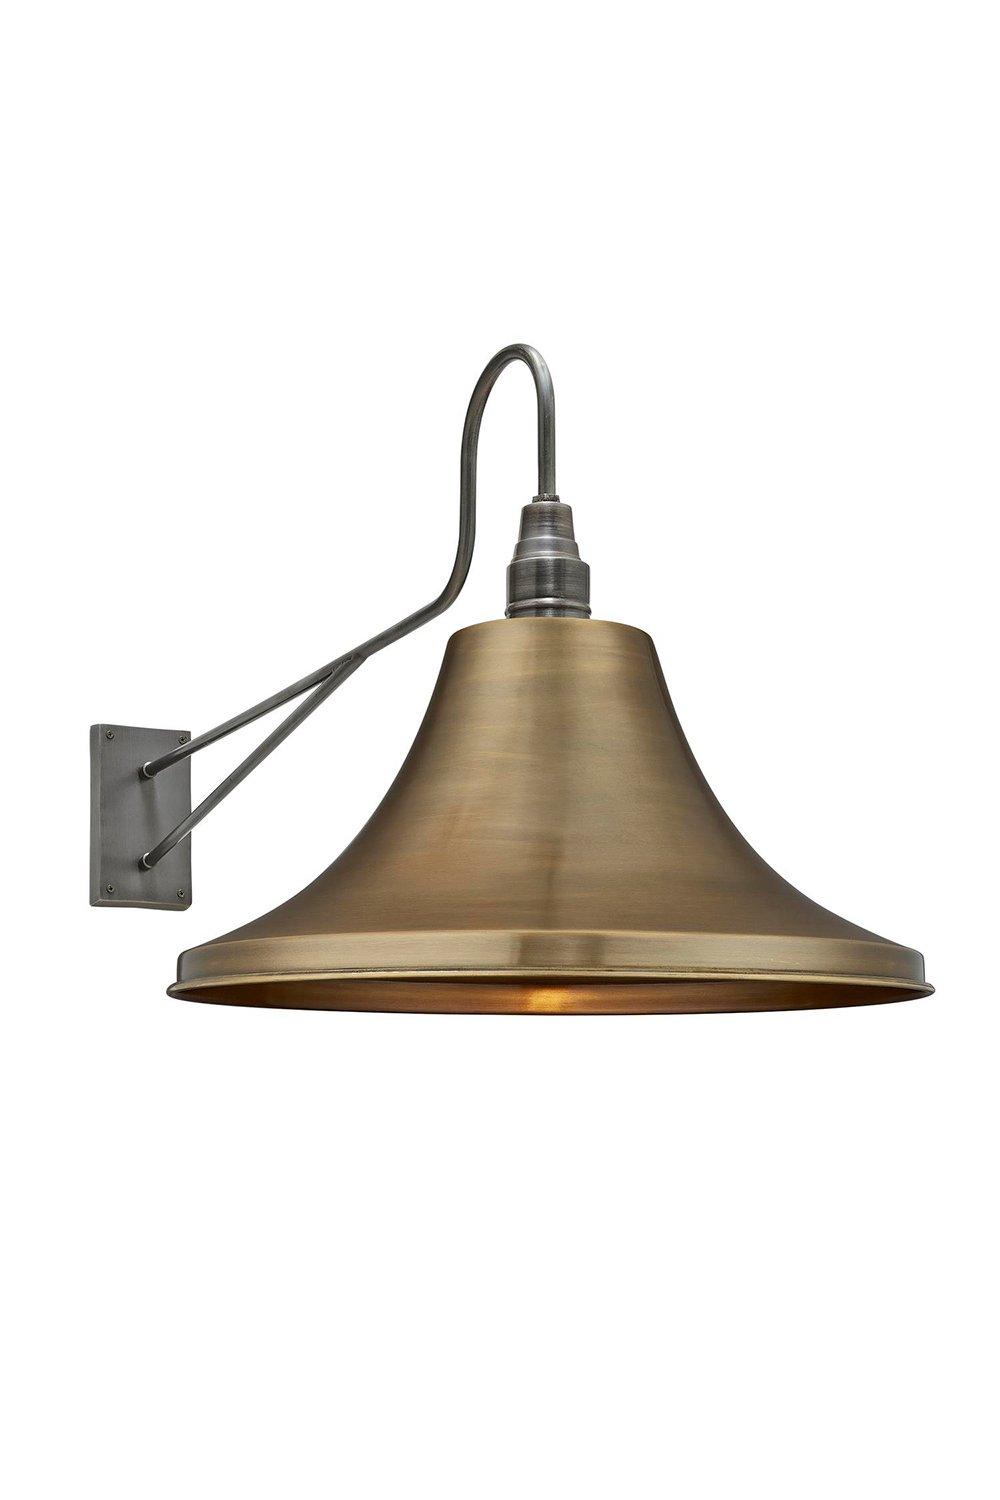 Long Arm Giant Bell Wall Light, 20 Inch, Brass, Pewter Holder